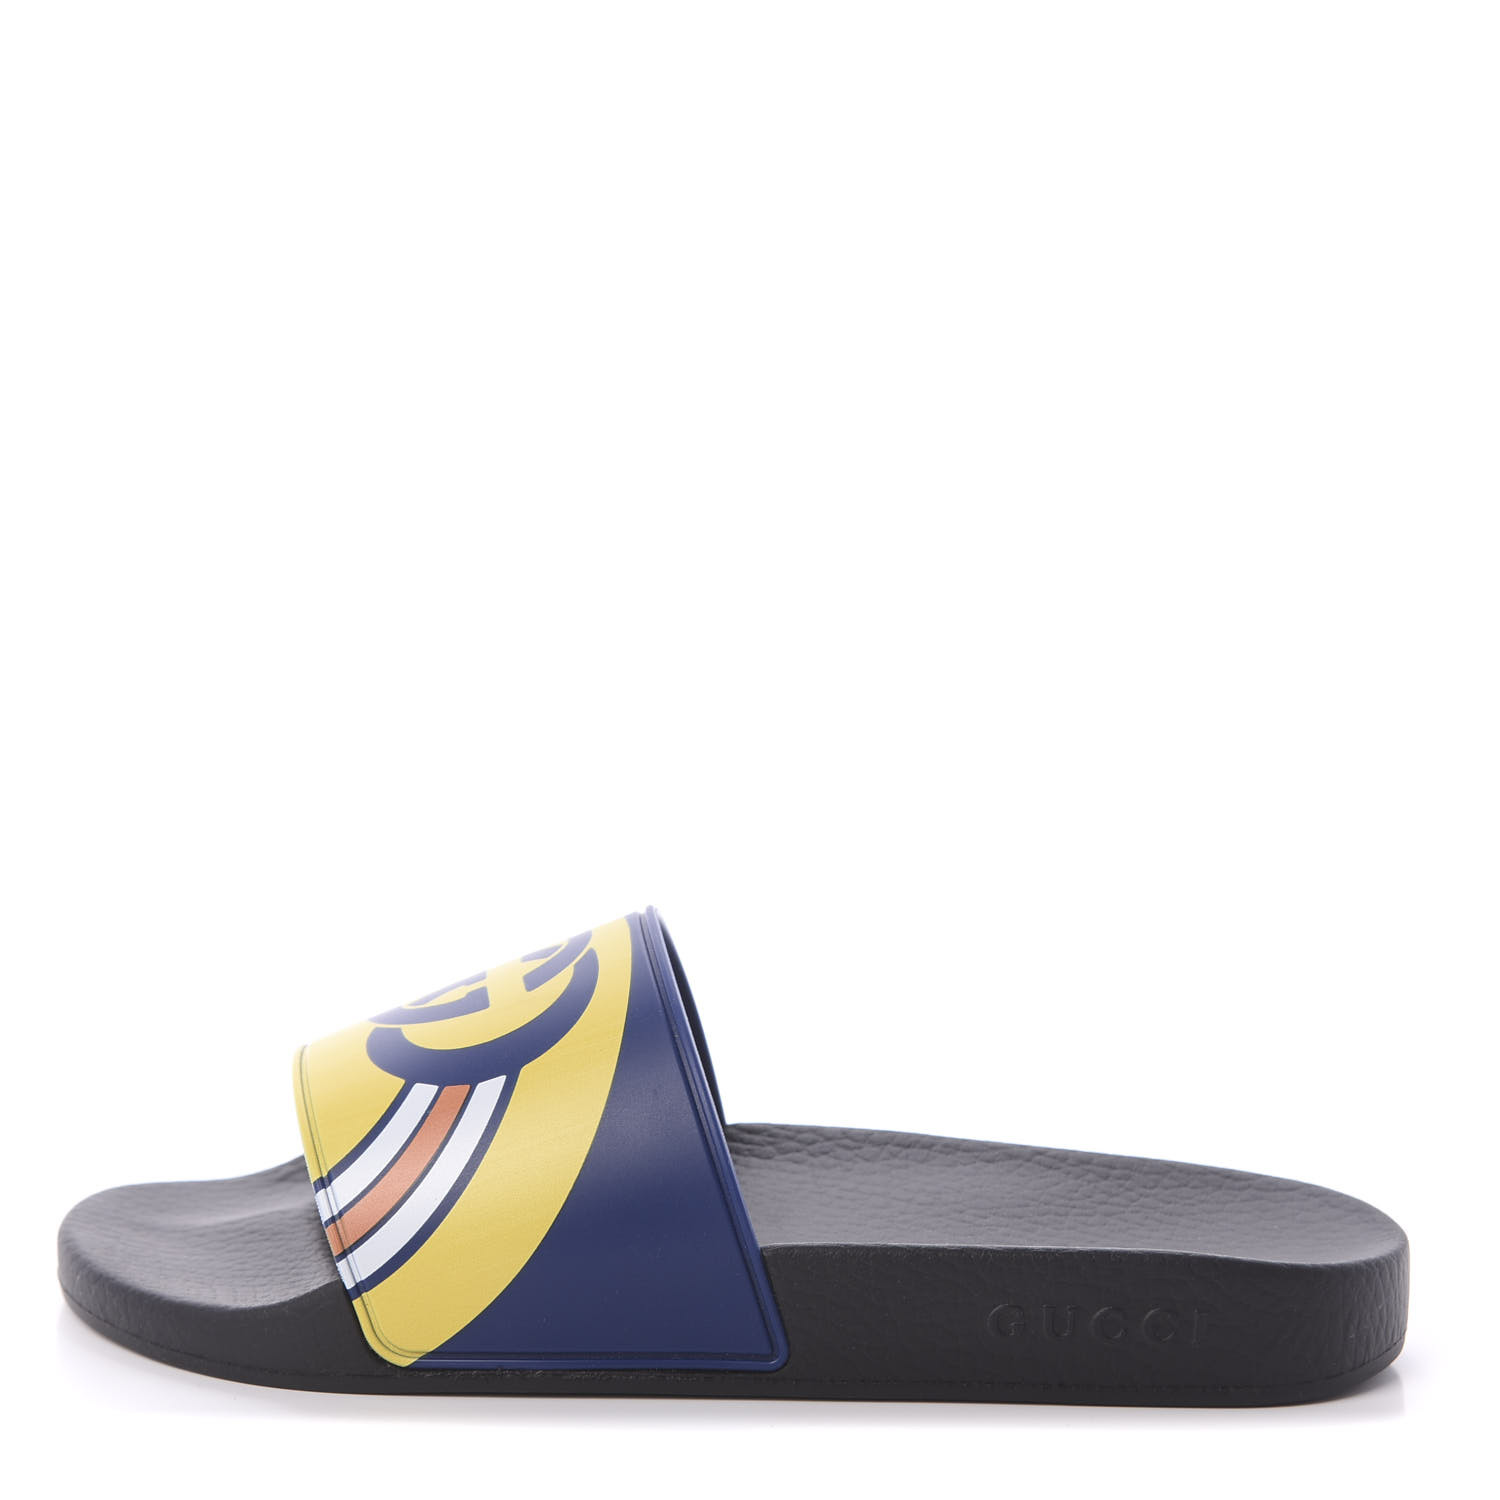 gucci slide sandals size 6